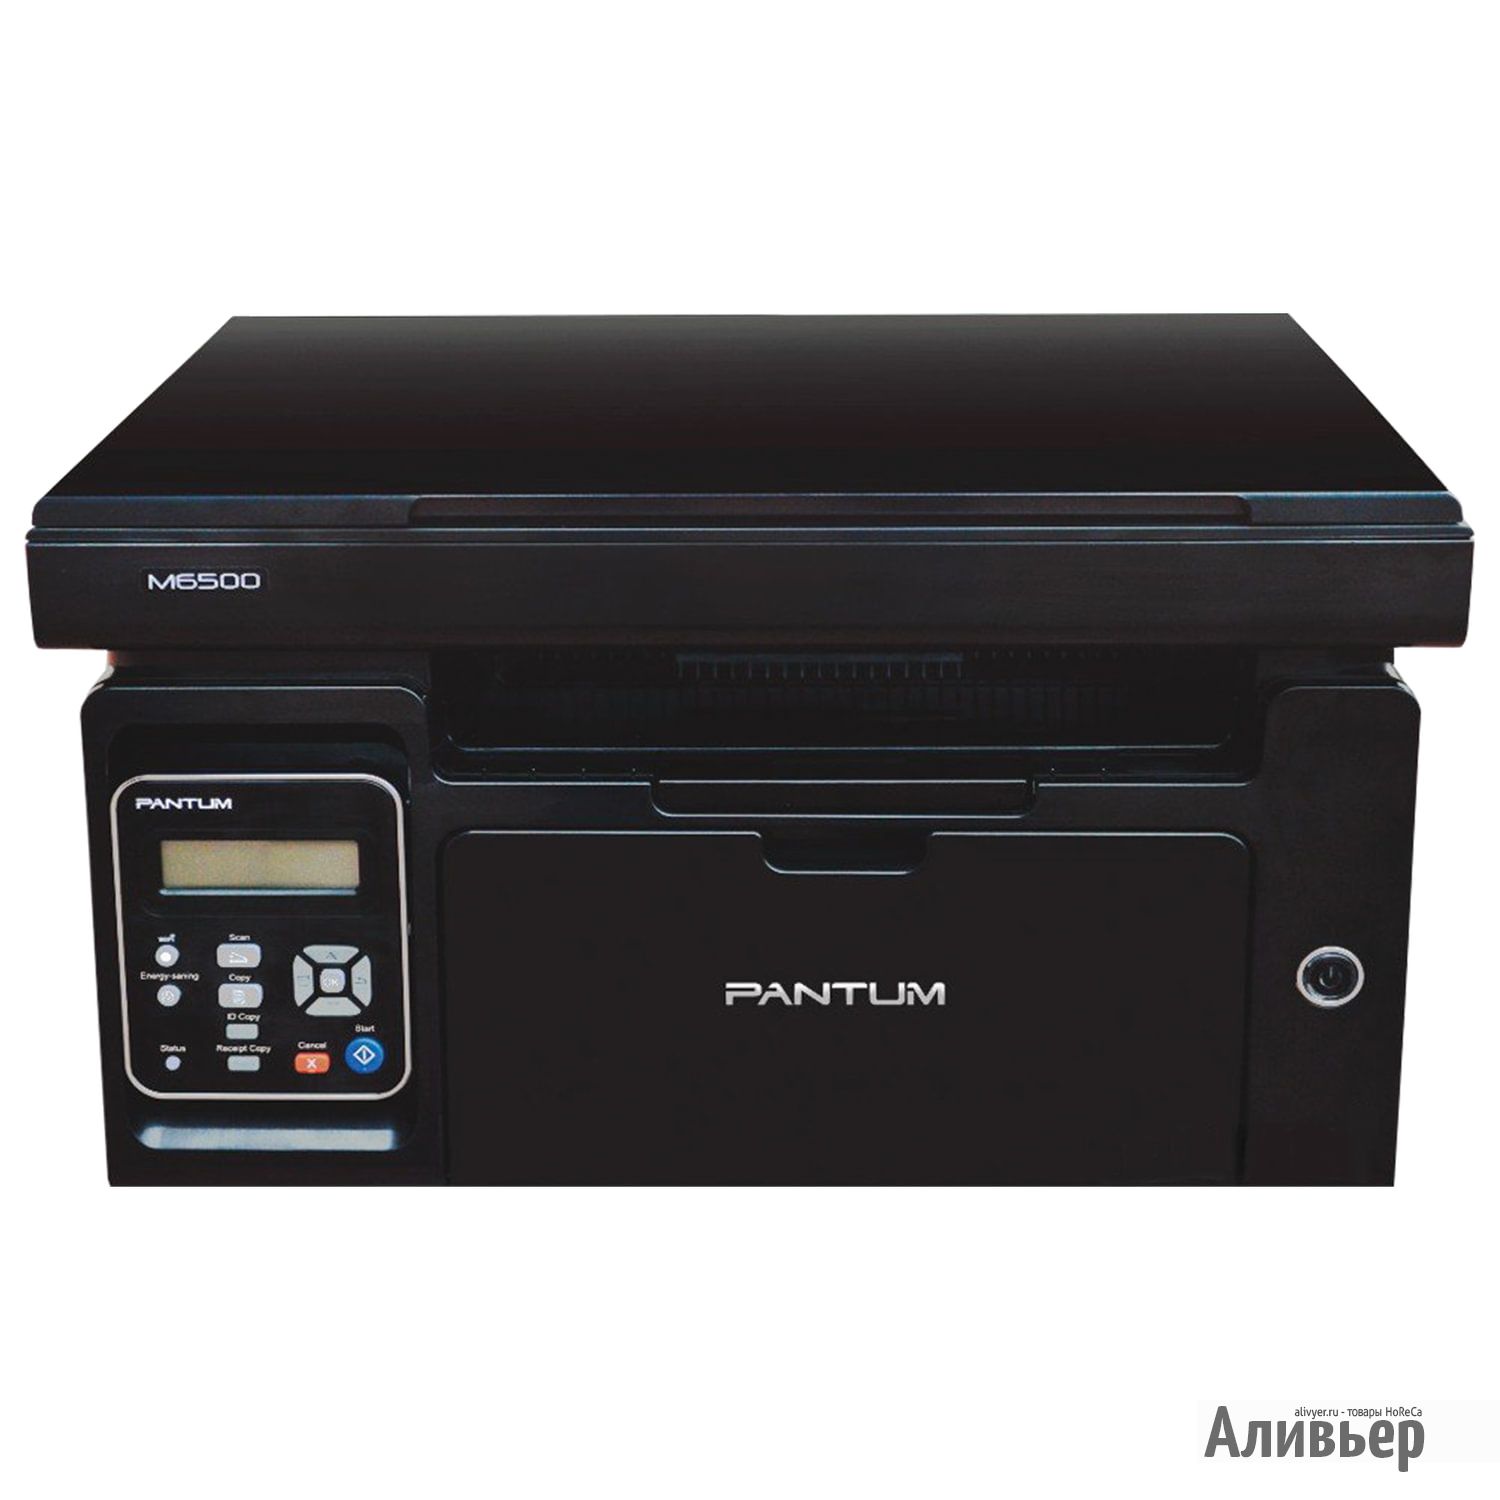 Купить картридж для принтера m6500. Pantum m6500w. МФУ Pantum m6500. Лазерный принтер Pantum m6500. МФУ лазерное Pantum m6500, ч/б, a4, черный.